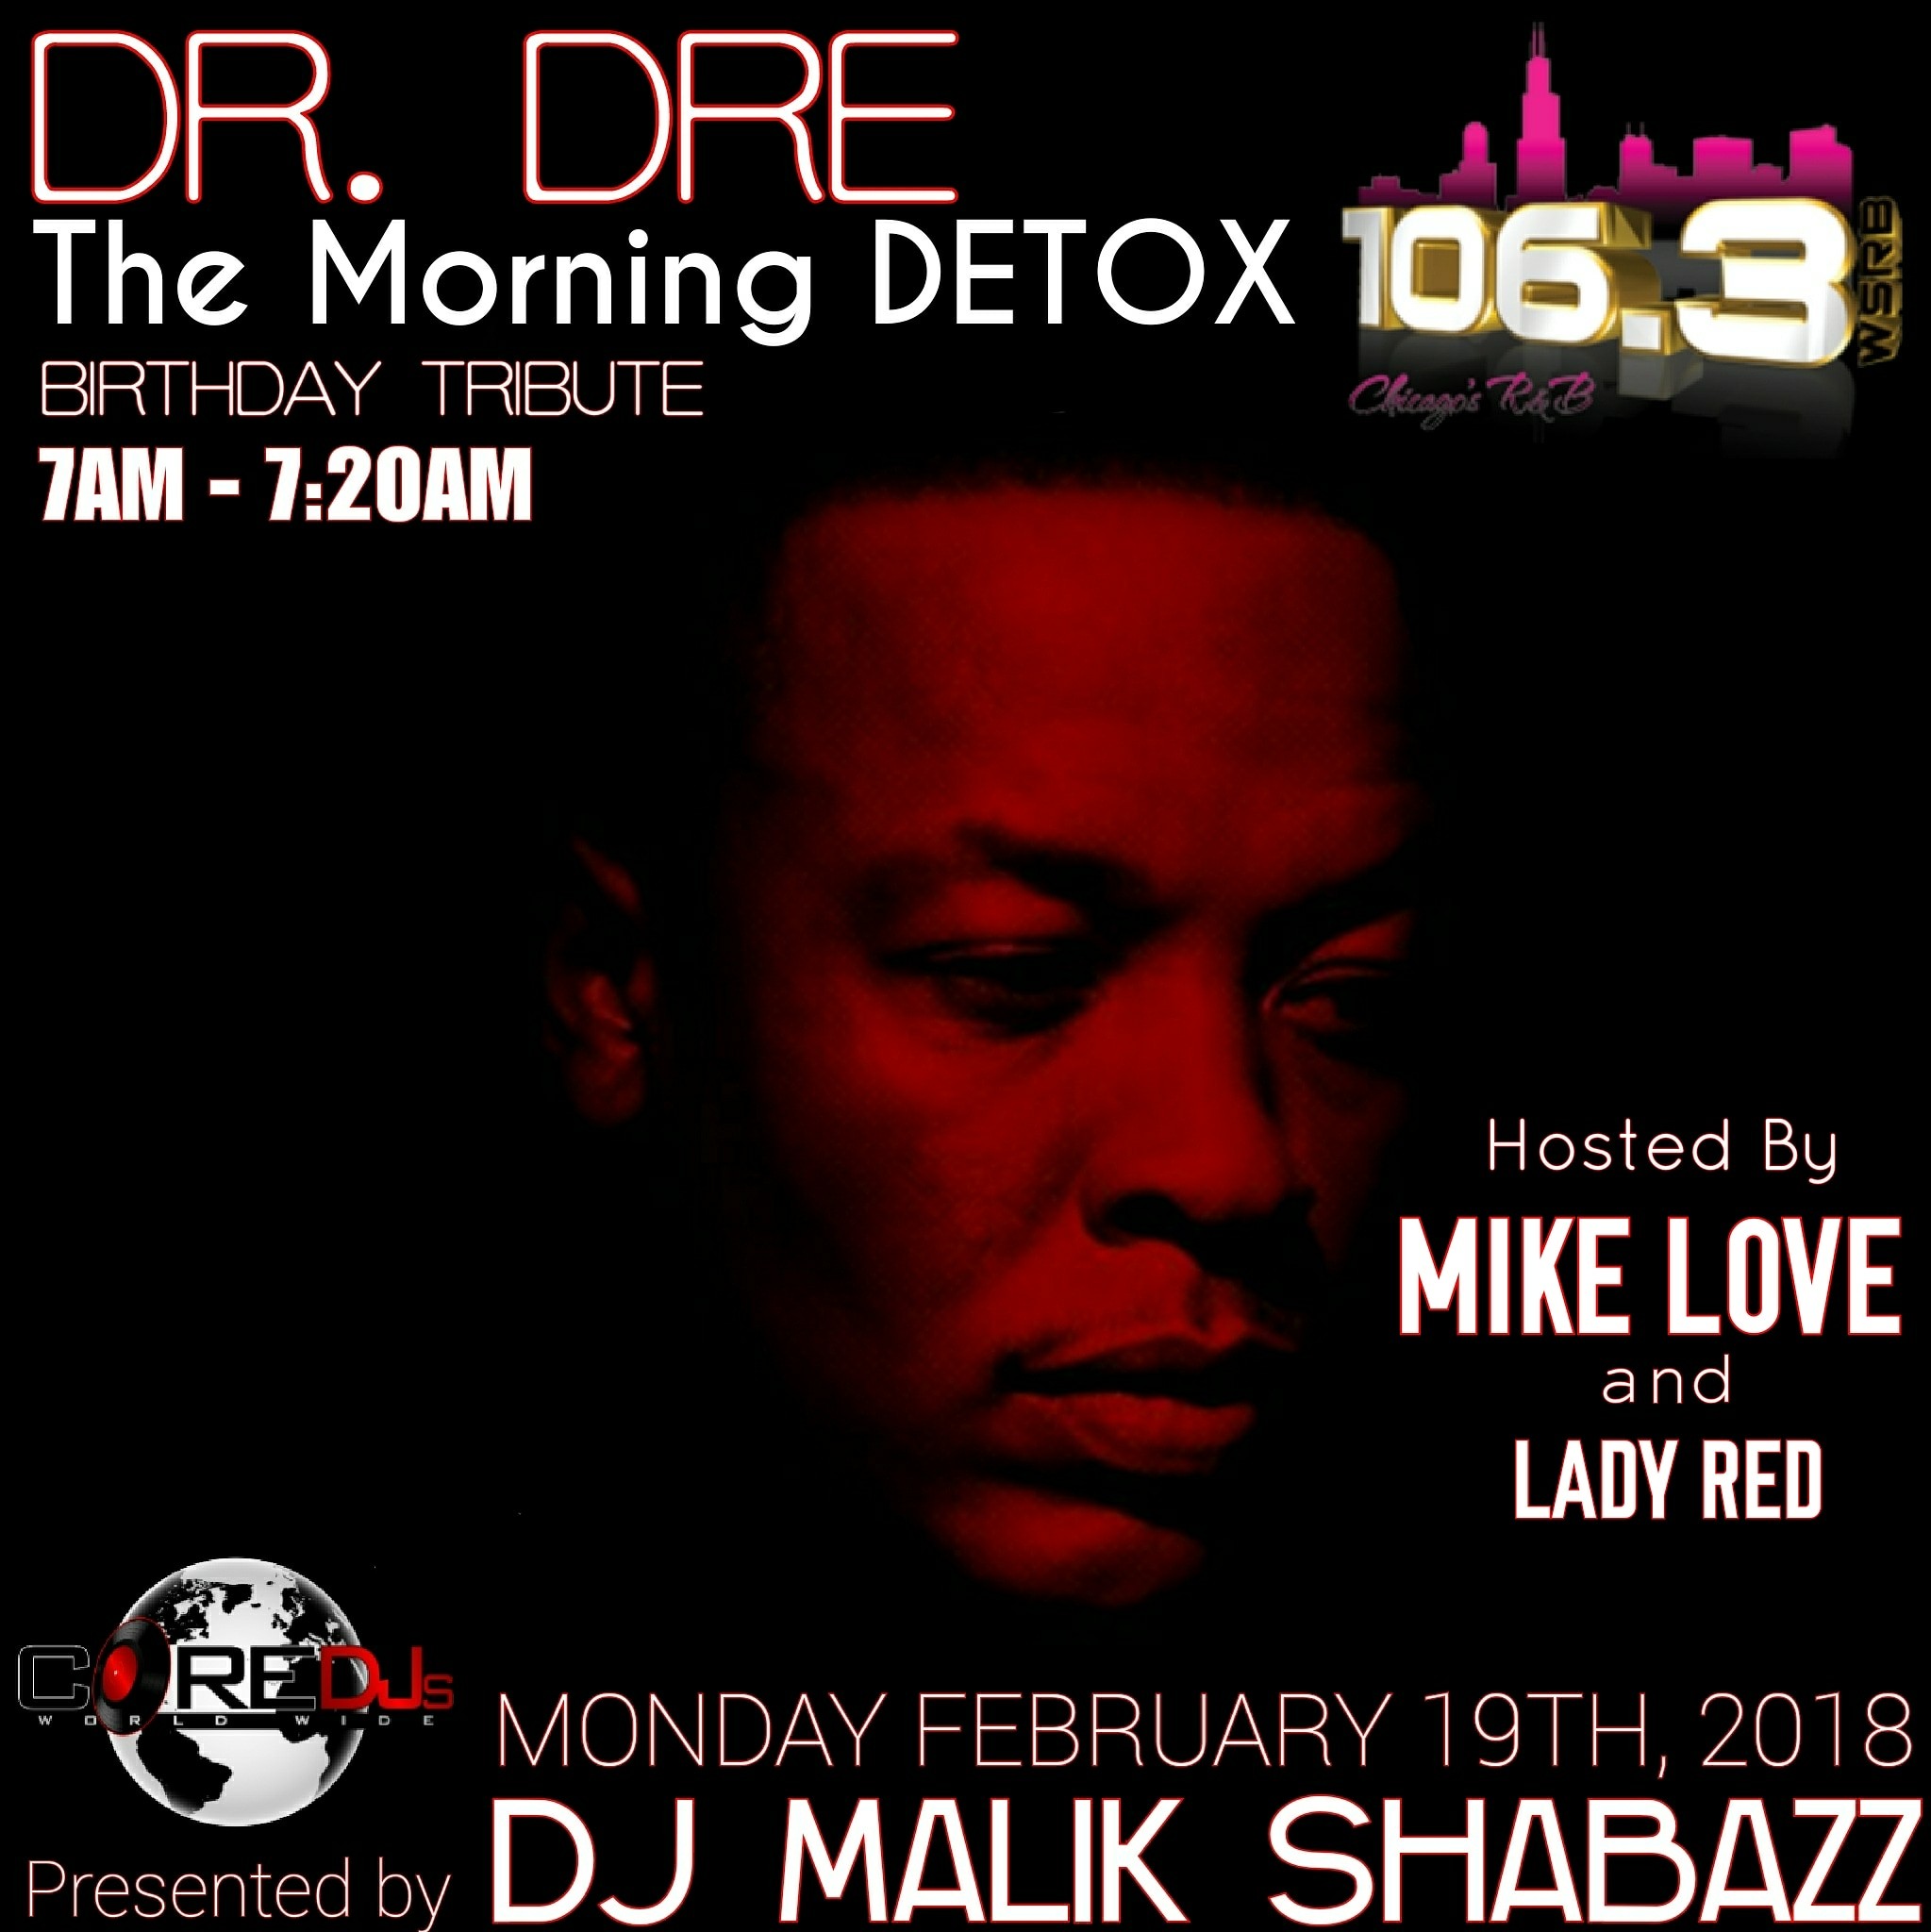 DJ MALIK SHABAZZ - DR. DRE Birthday Tribute on #TheMorningMixtape 106.3 Chicago